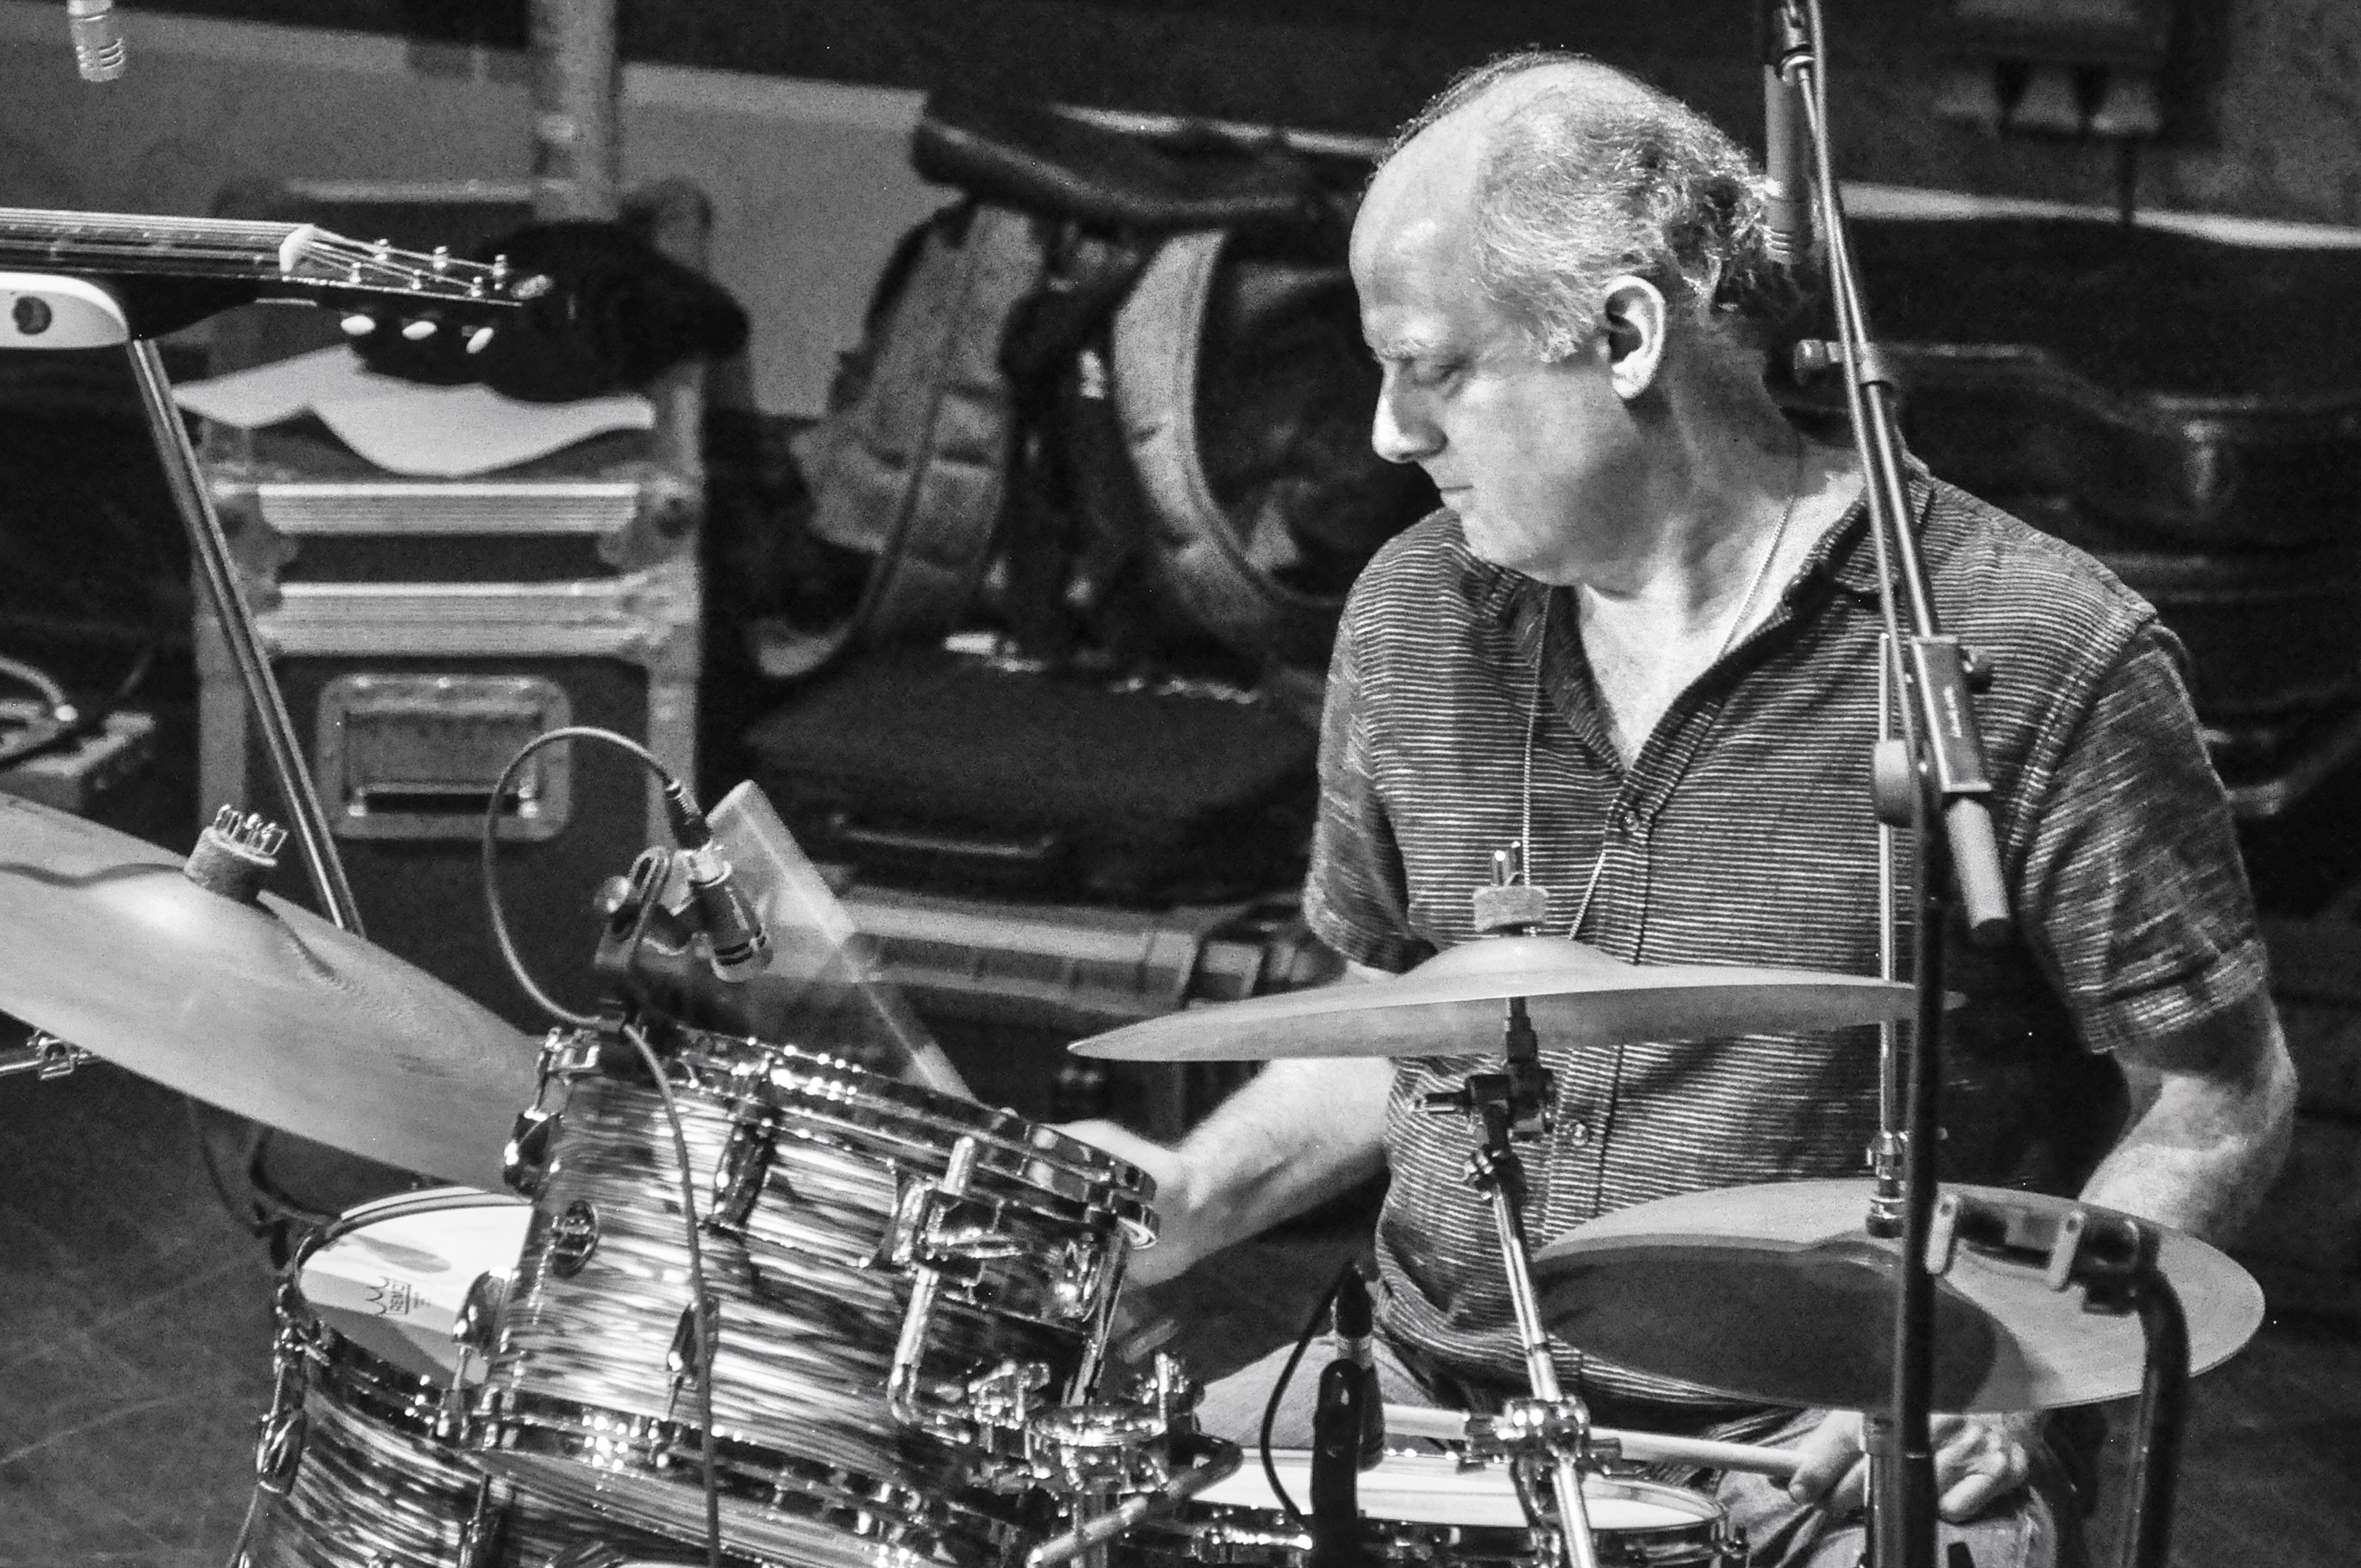 Drummer Pete Lavezzoli, of Jazz Is Dead